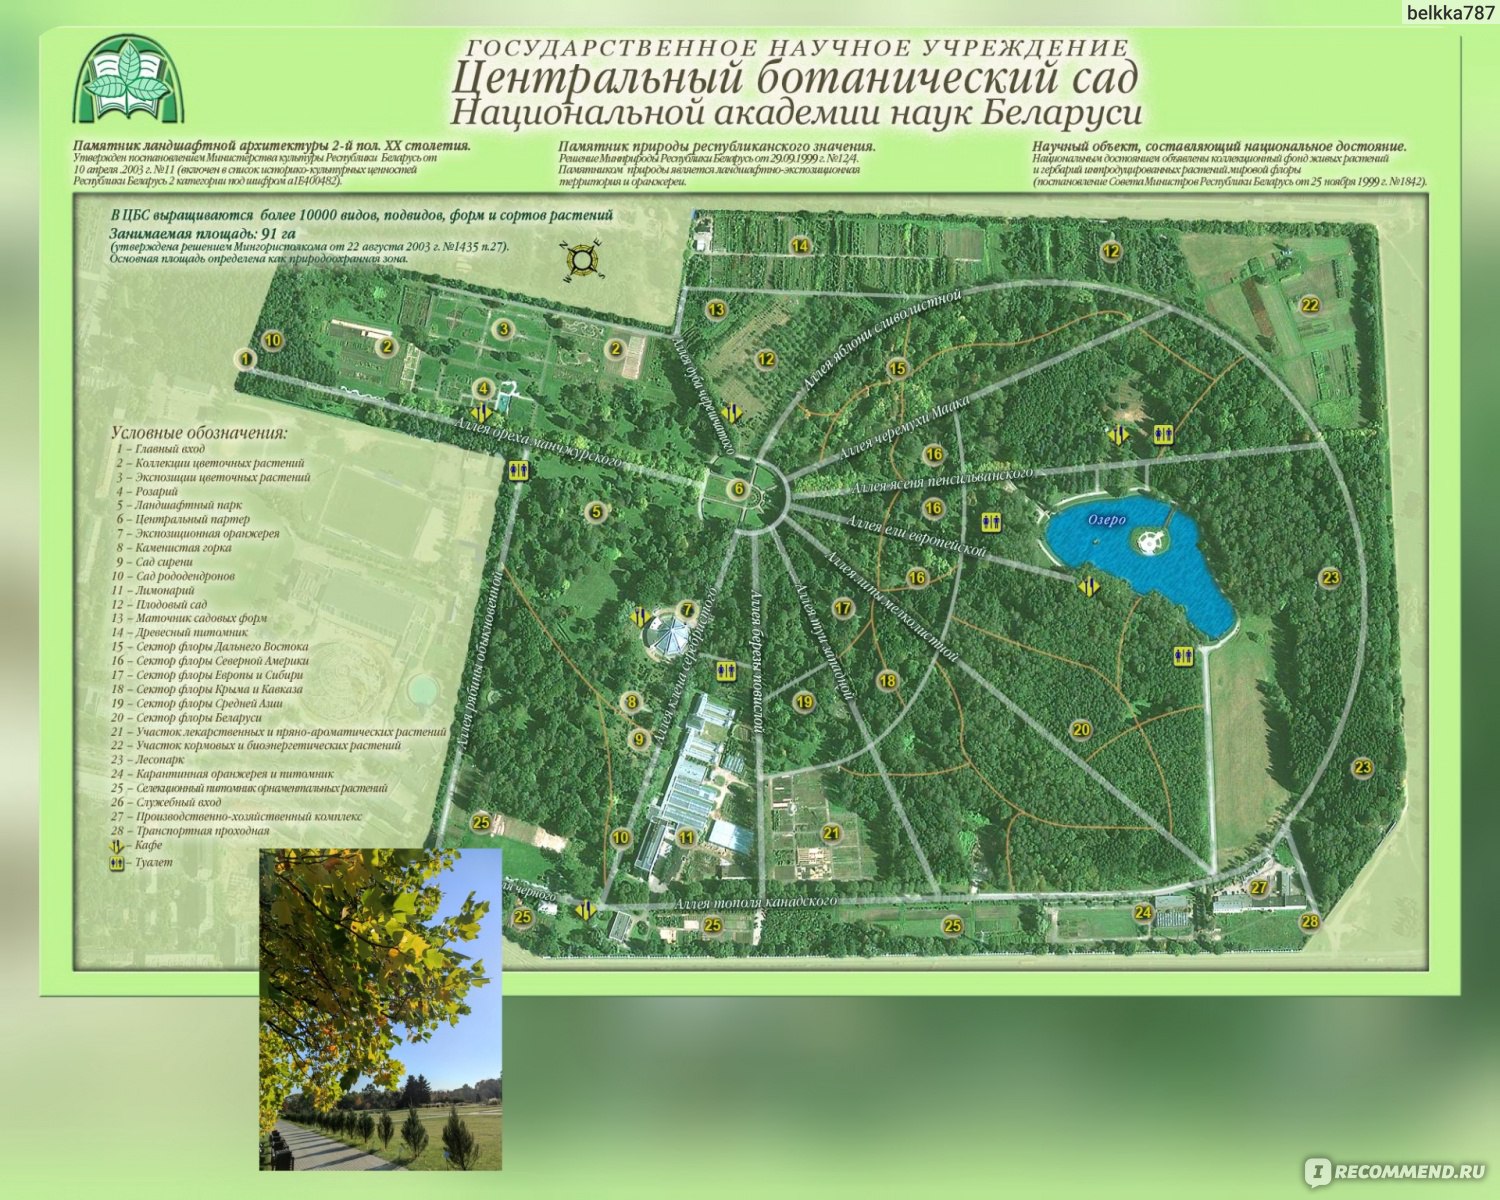 Ботанический сад Москва схема парка